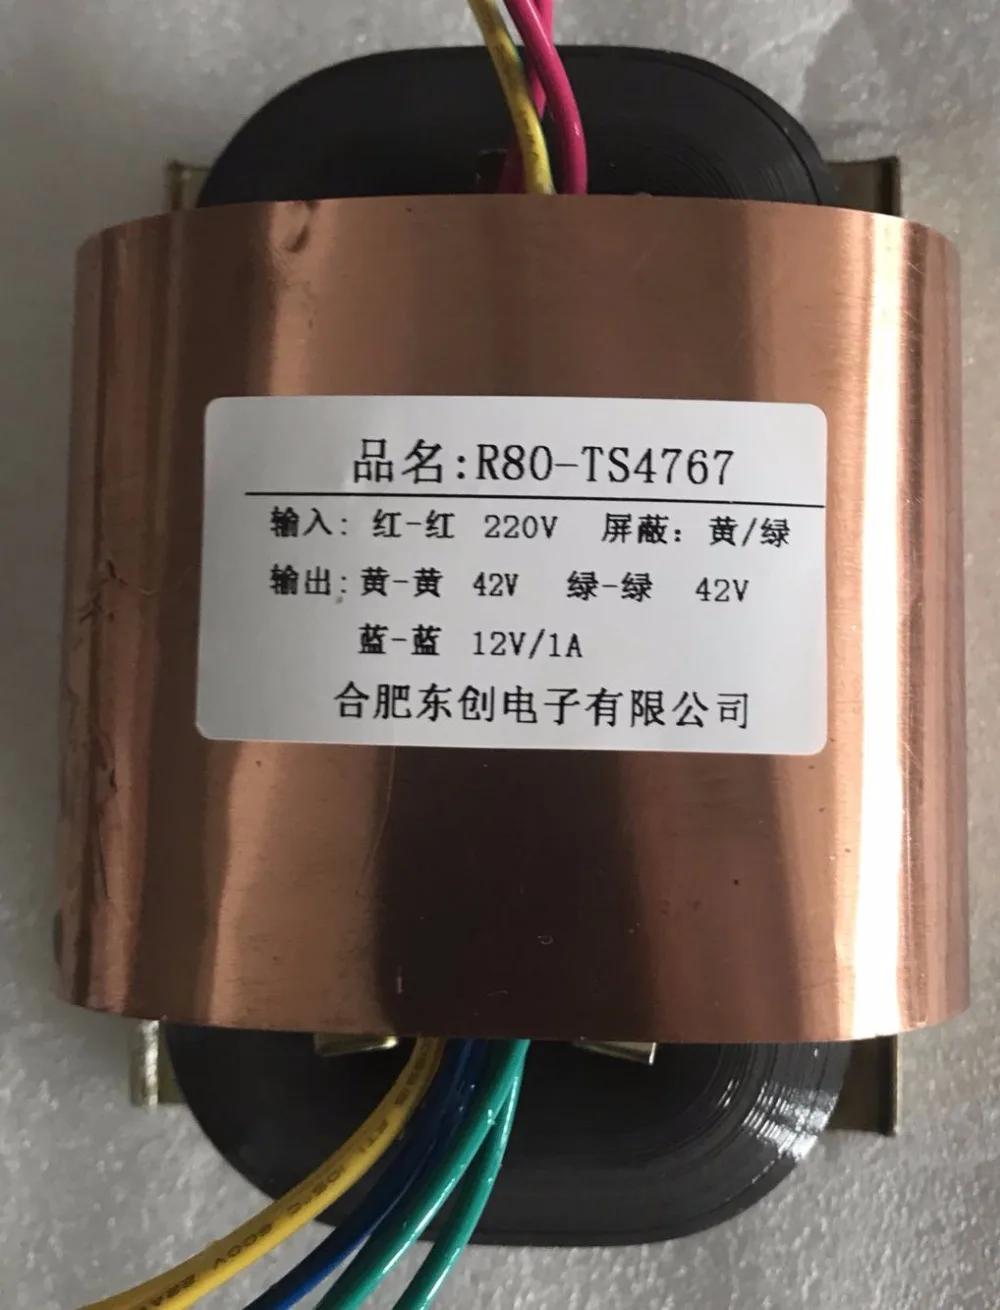 Фото 2*42V 1A 12V R Core Transformer 100VA R80 custom transformer 220V input with copper shield output for Power amplifier | Обустройство